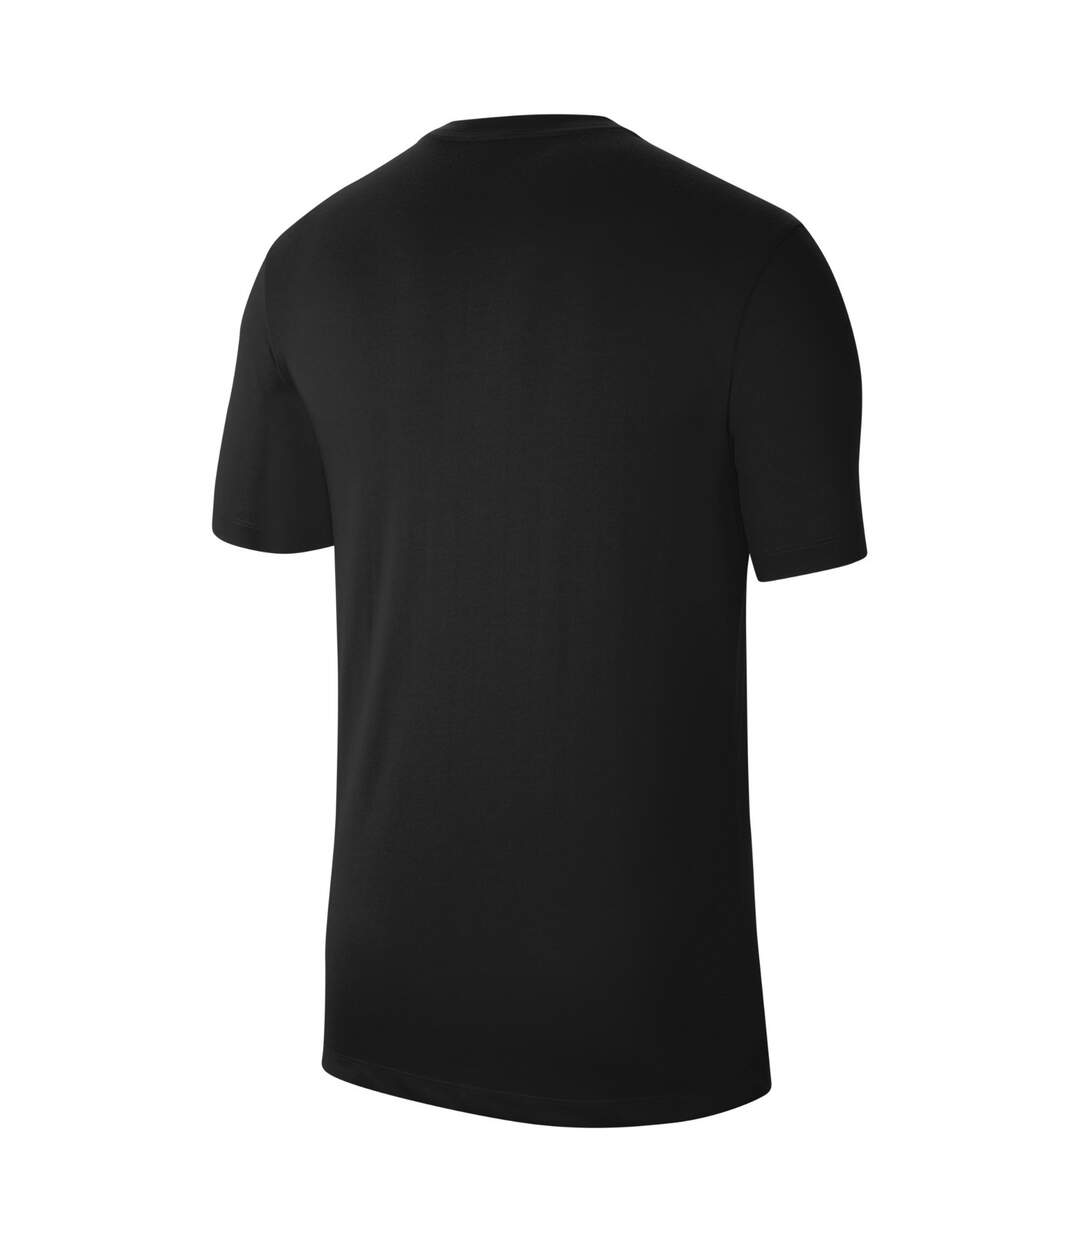 Nike T-Shirt unisexe adulte Park (Noir) - UTBS2893